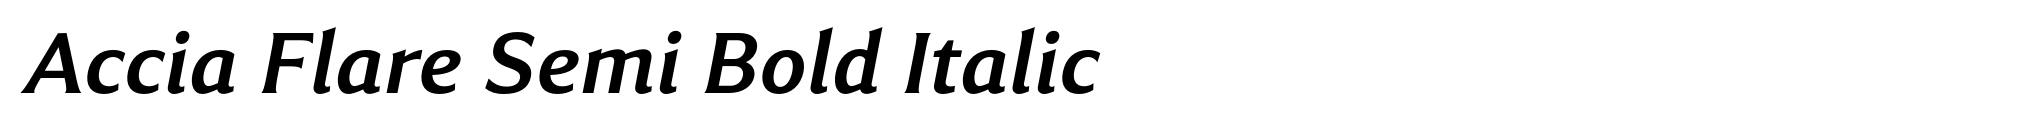 Accia Flare Semi Bold Italic image